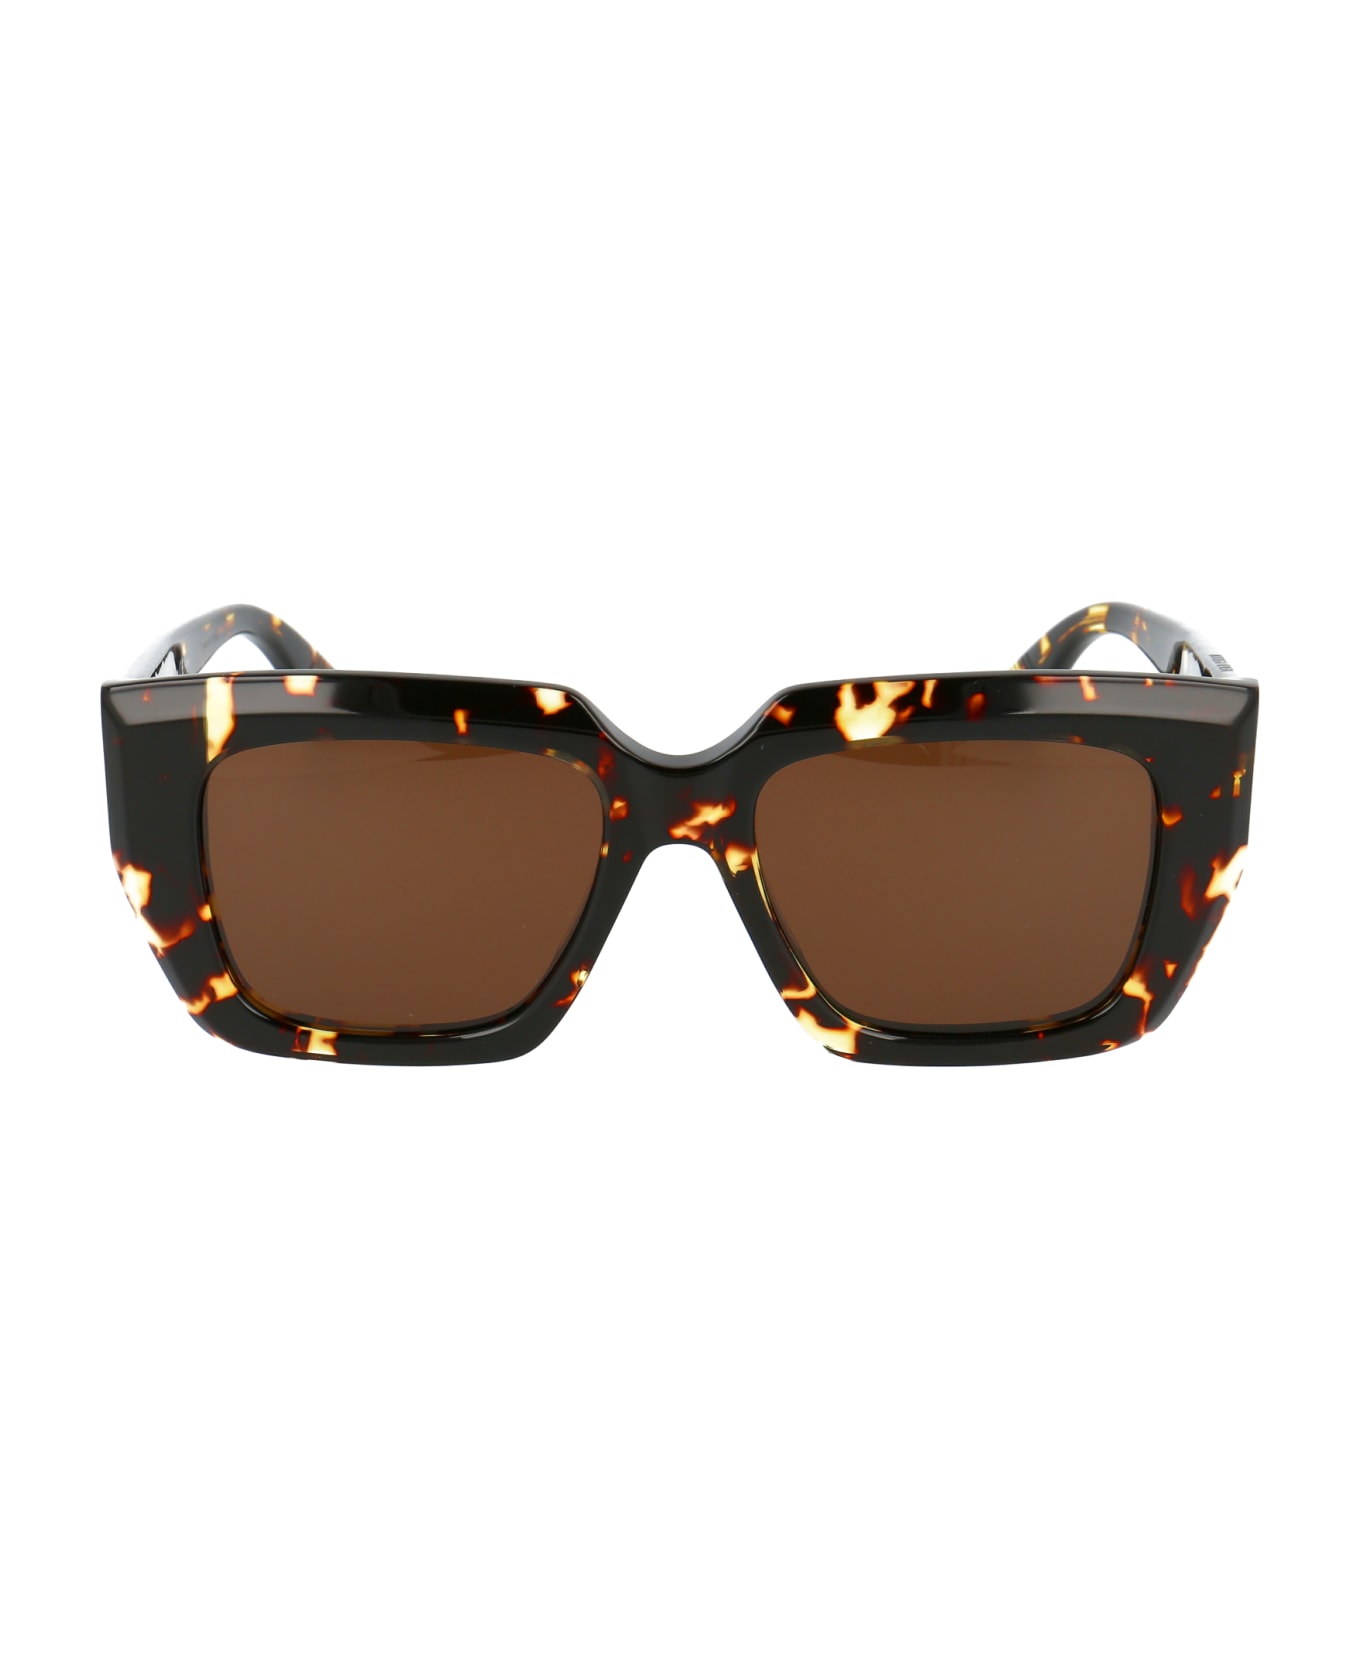 Bottega Veneta Eyewear Bv1030s Sunglasses - 002 HAVANA HAVANA BROWN サングラス